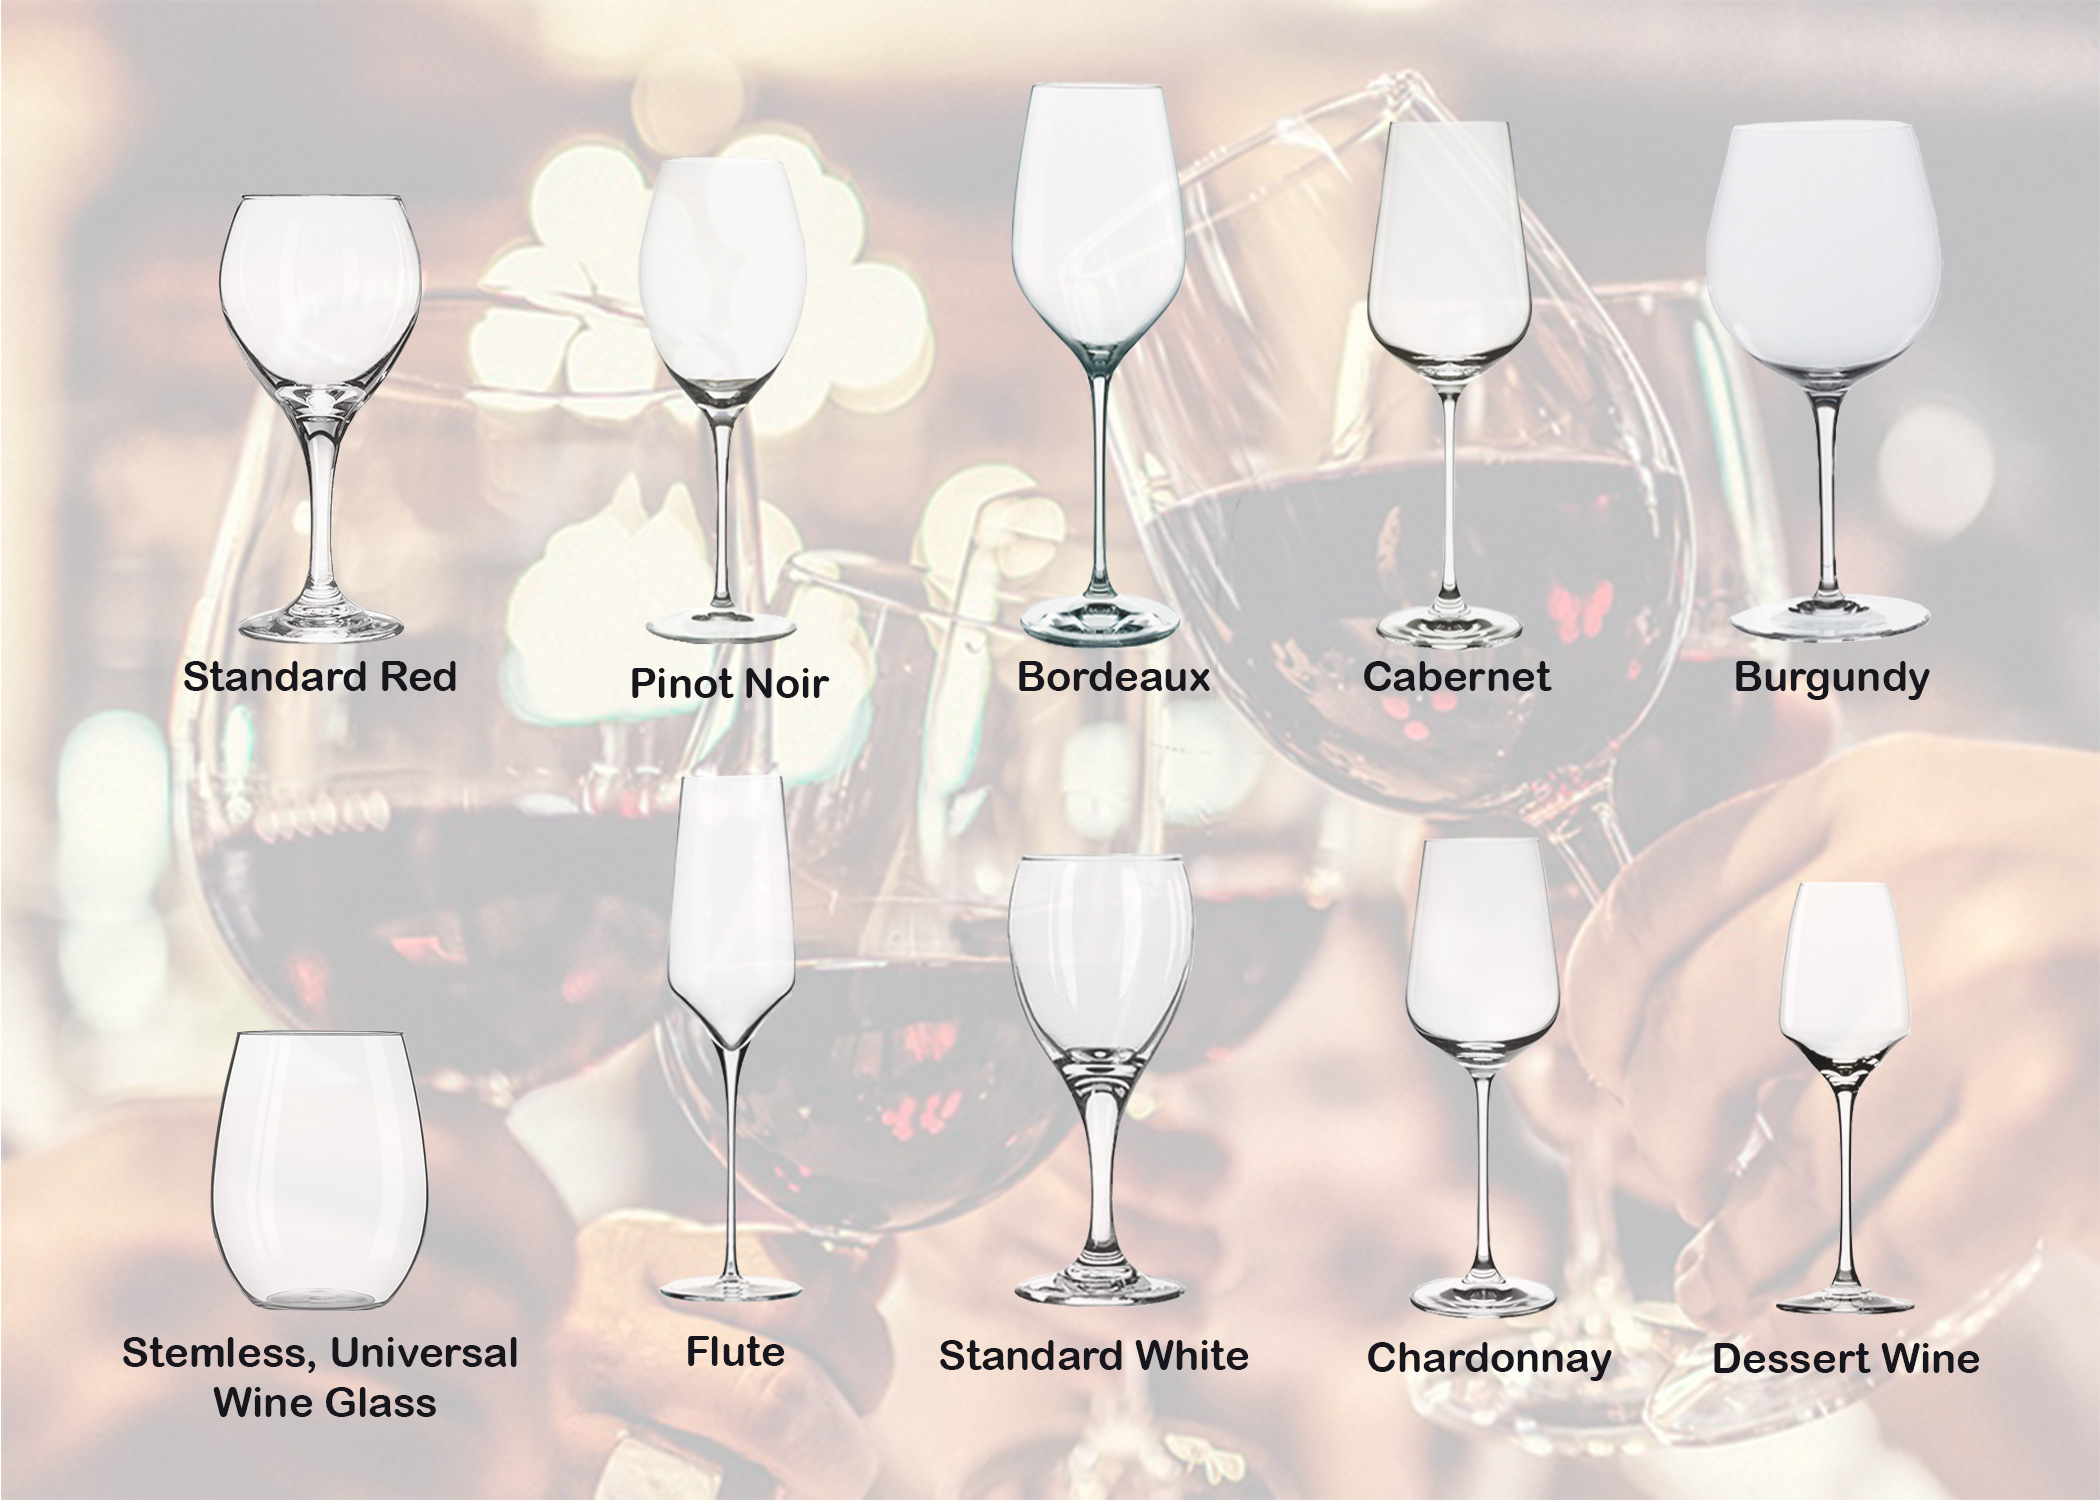 https://resources.centralrestaurant.com/wp-content/uploads/2019/08/wine-glass-infographic-for-web.jpg